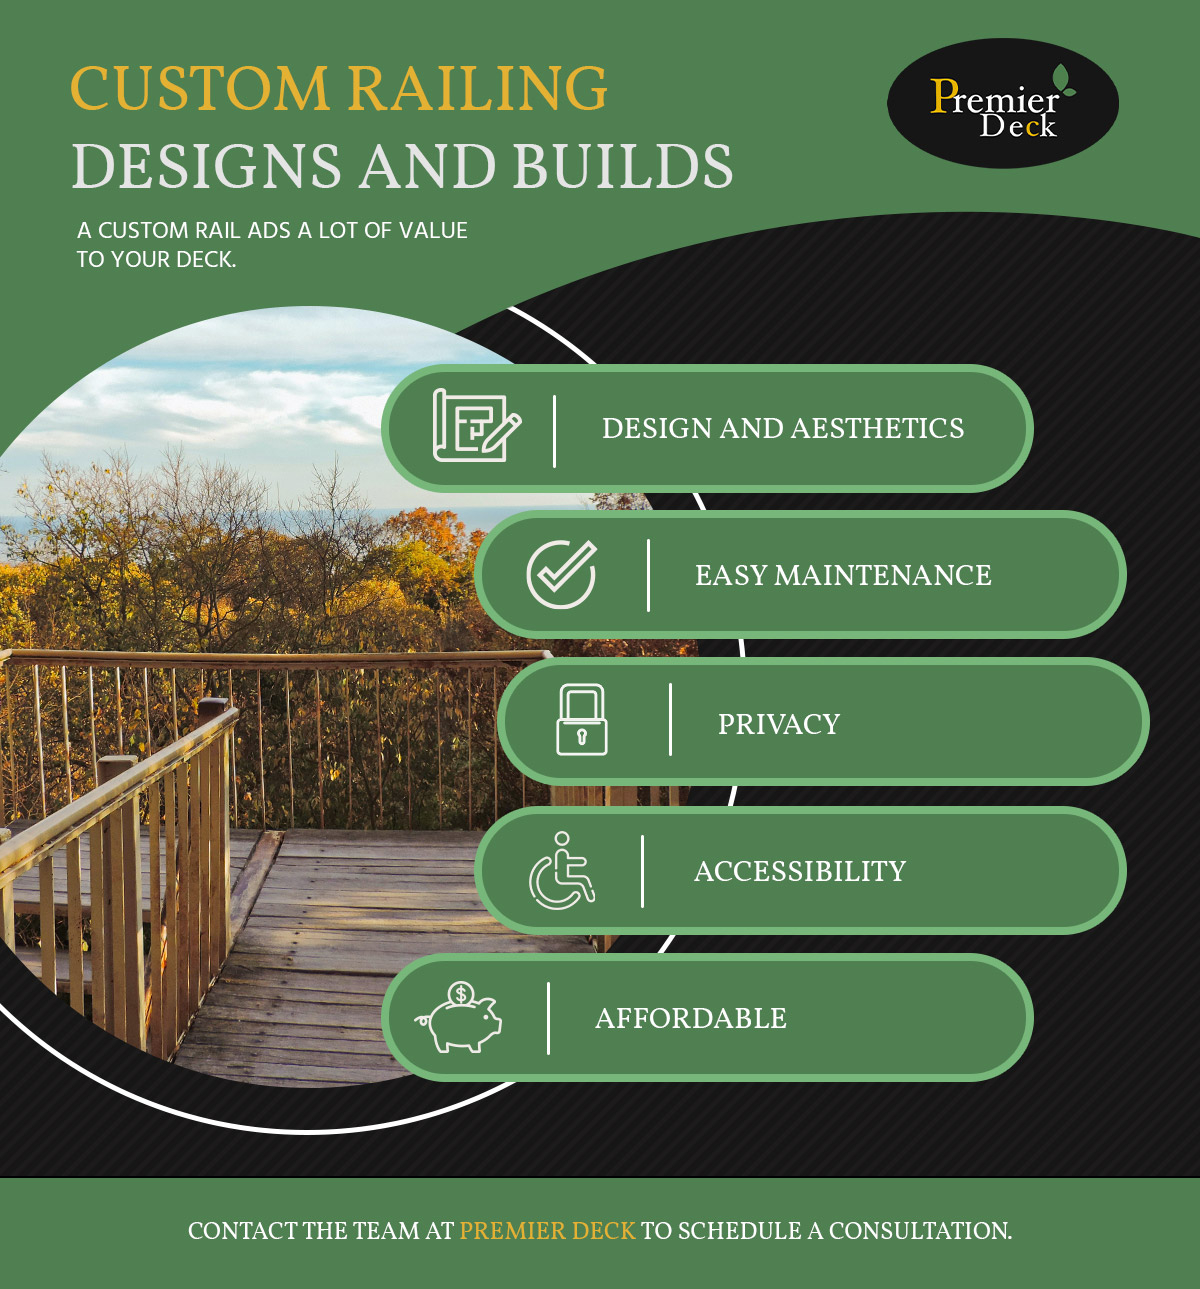 Custom-Railing-Designs-and-Builds-608c35460b5a1.jpg